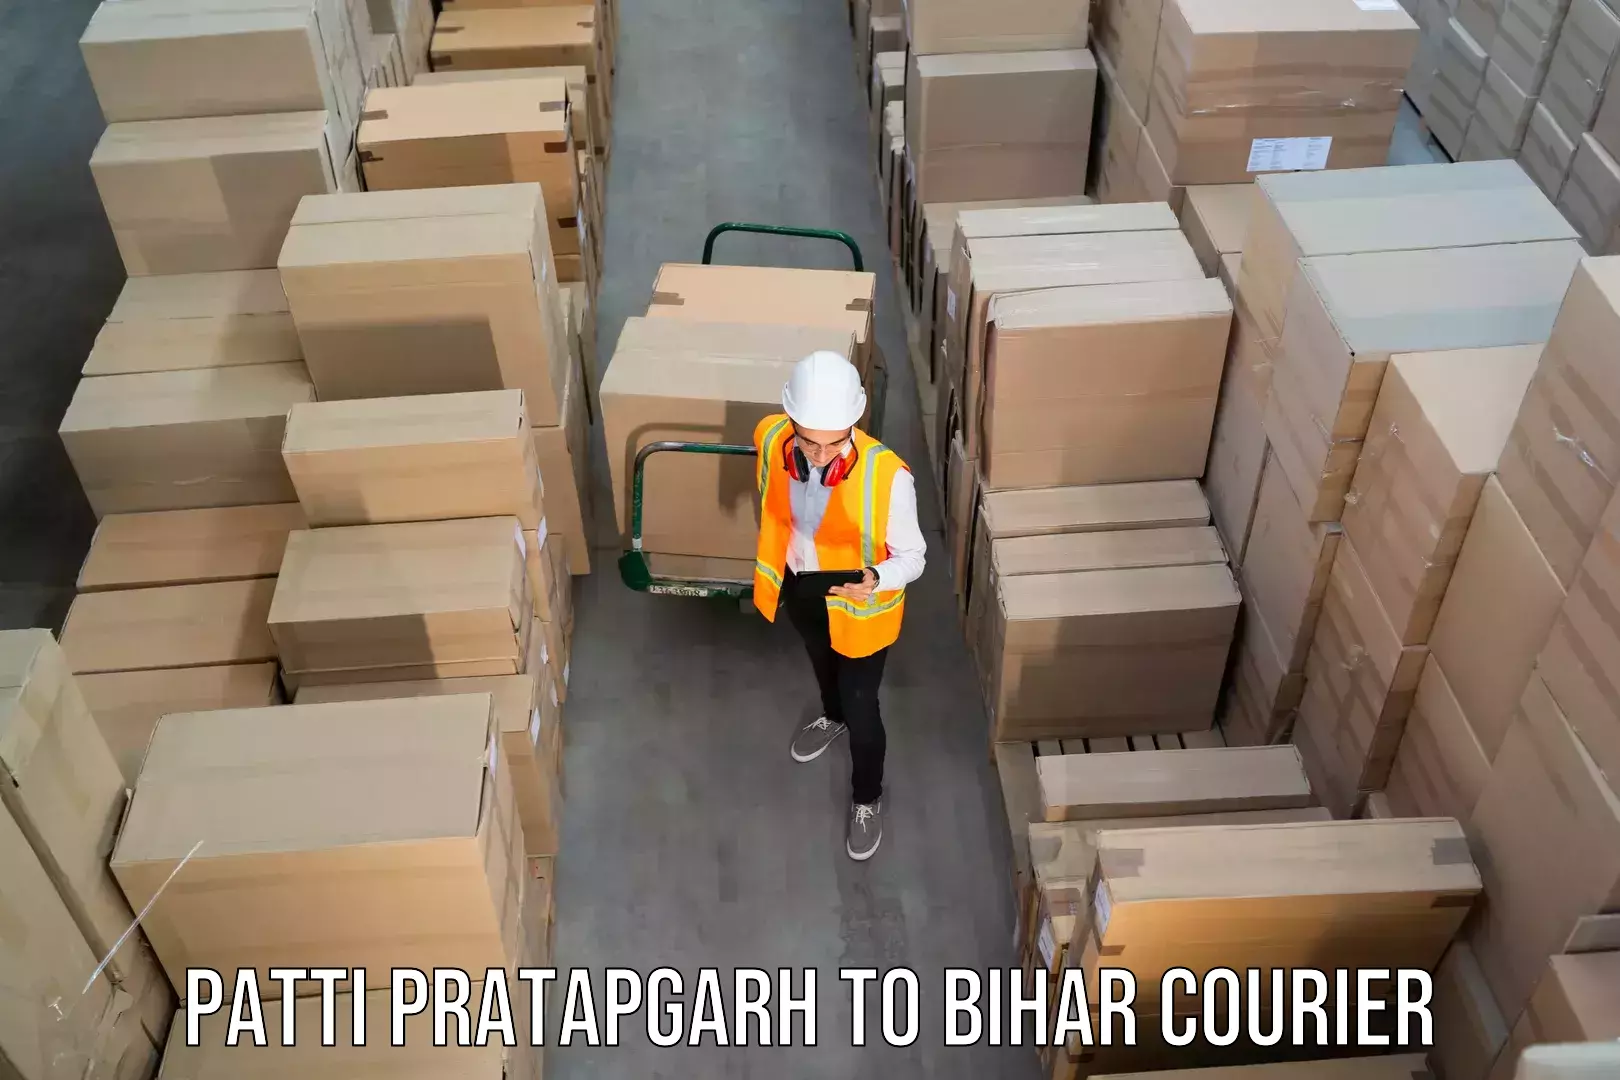 Round-the-clock parcel delivery Patti Pratapgarh to Supaul